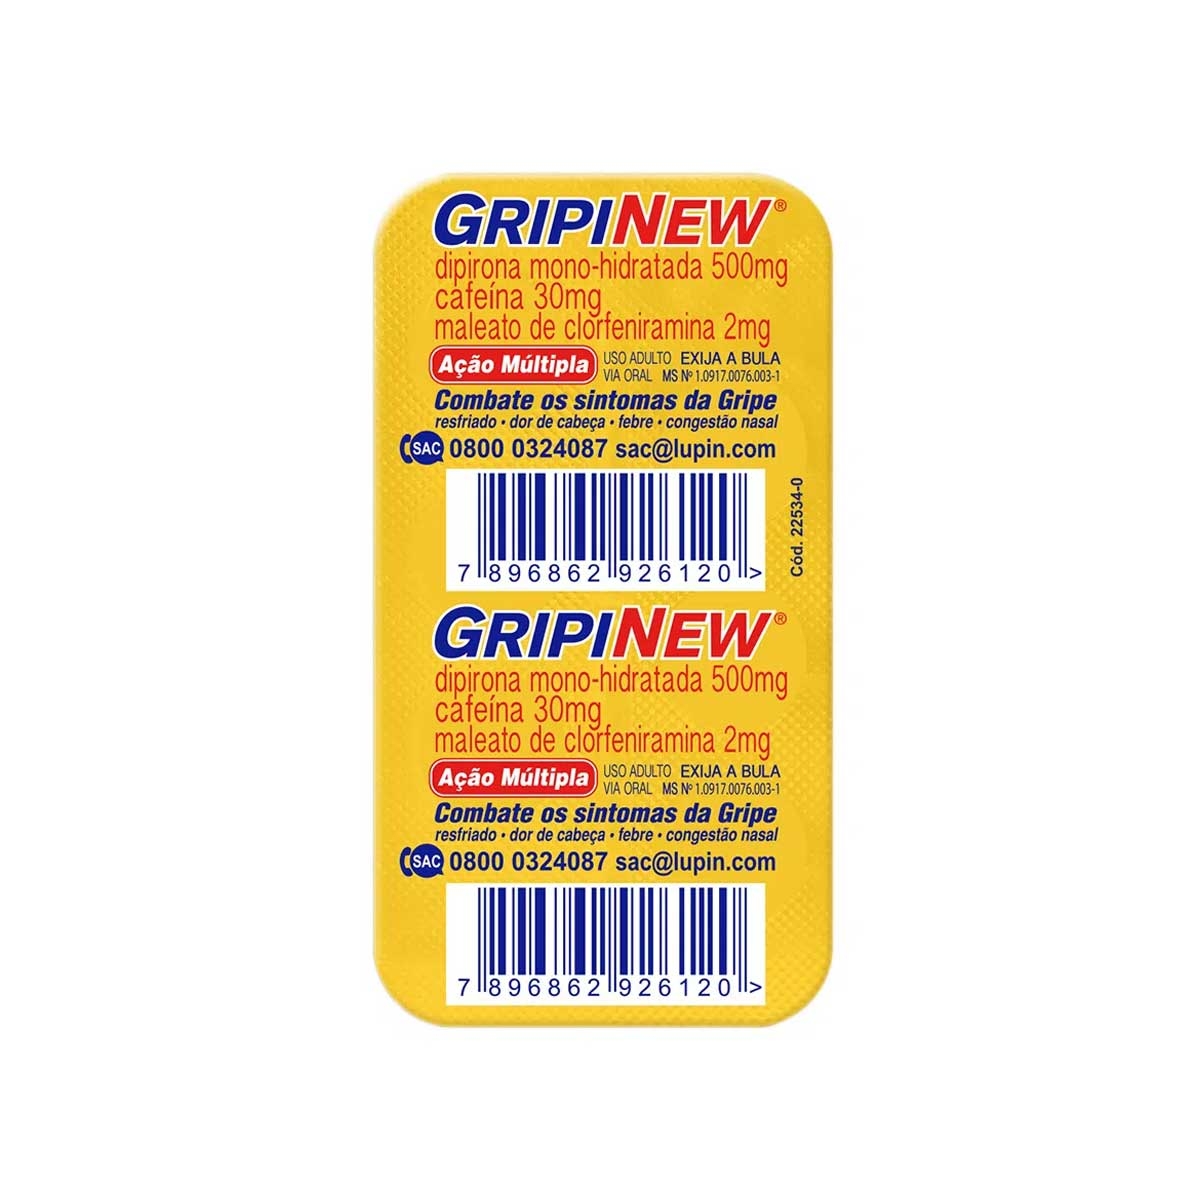 Gripinew Dipirona Monoidratada 500mg + Maleato de Clorfeniramina 2mg + Cafeína 30mg 6 comprimidos